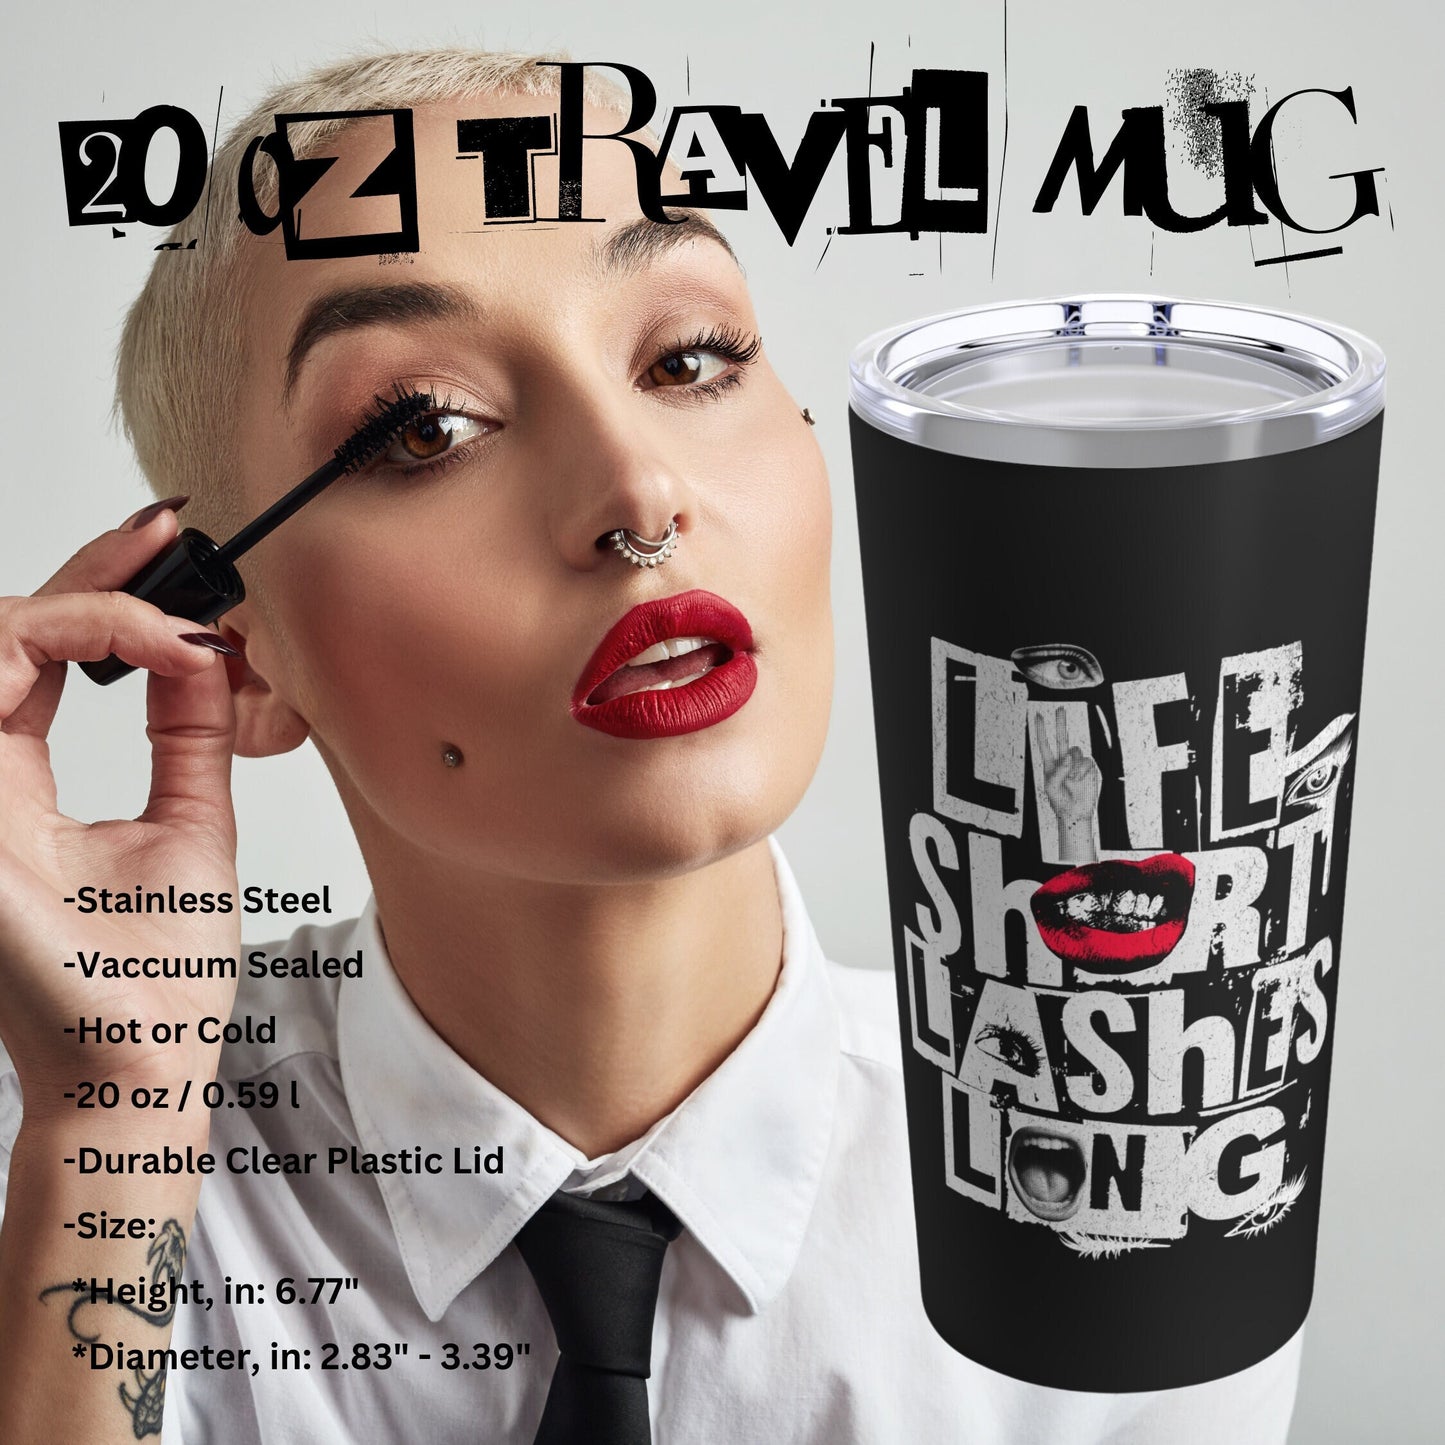 Punk Travel Tumbler 20oz Cup Makeup Artist 90s Style Cosmetics Lashes Gift Cosmetologist Esthetician Beautician Beauty School Lash Art Mug